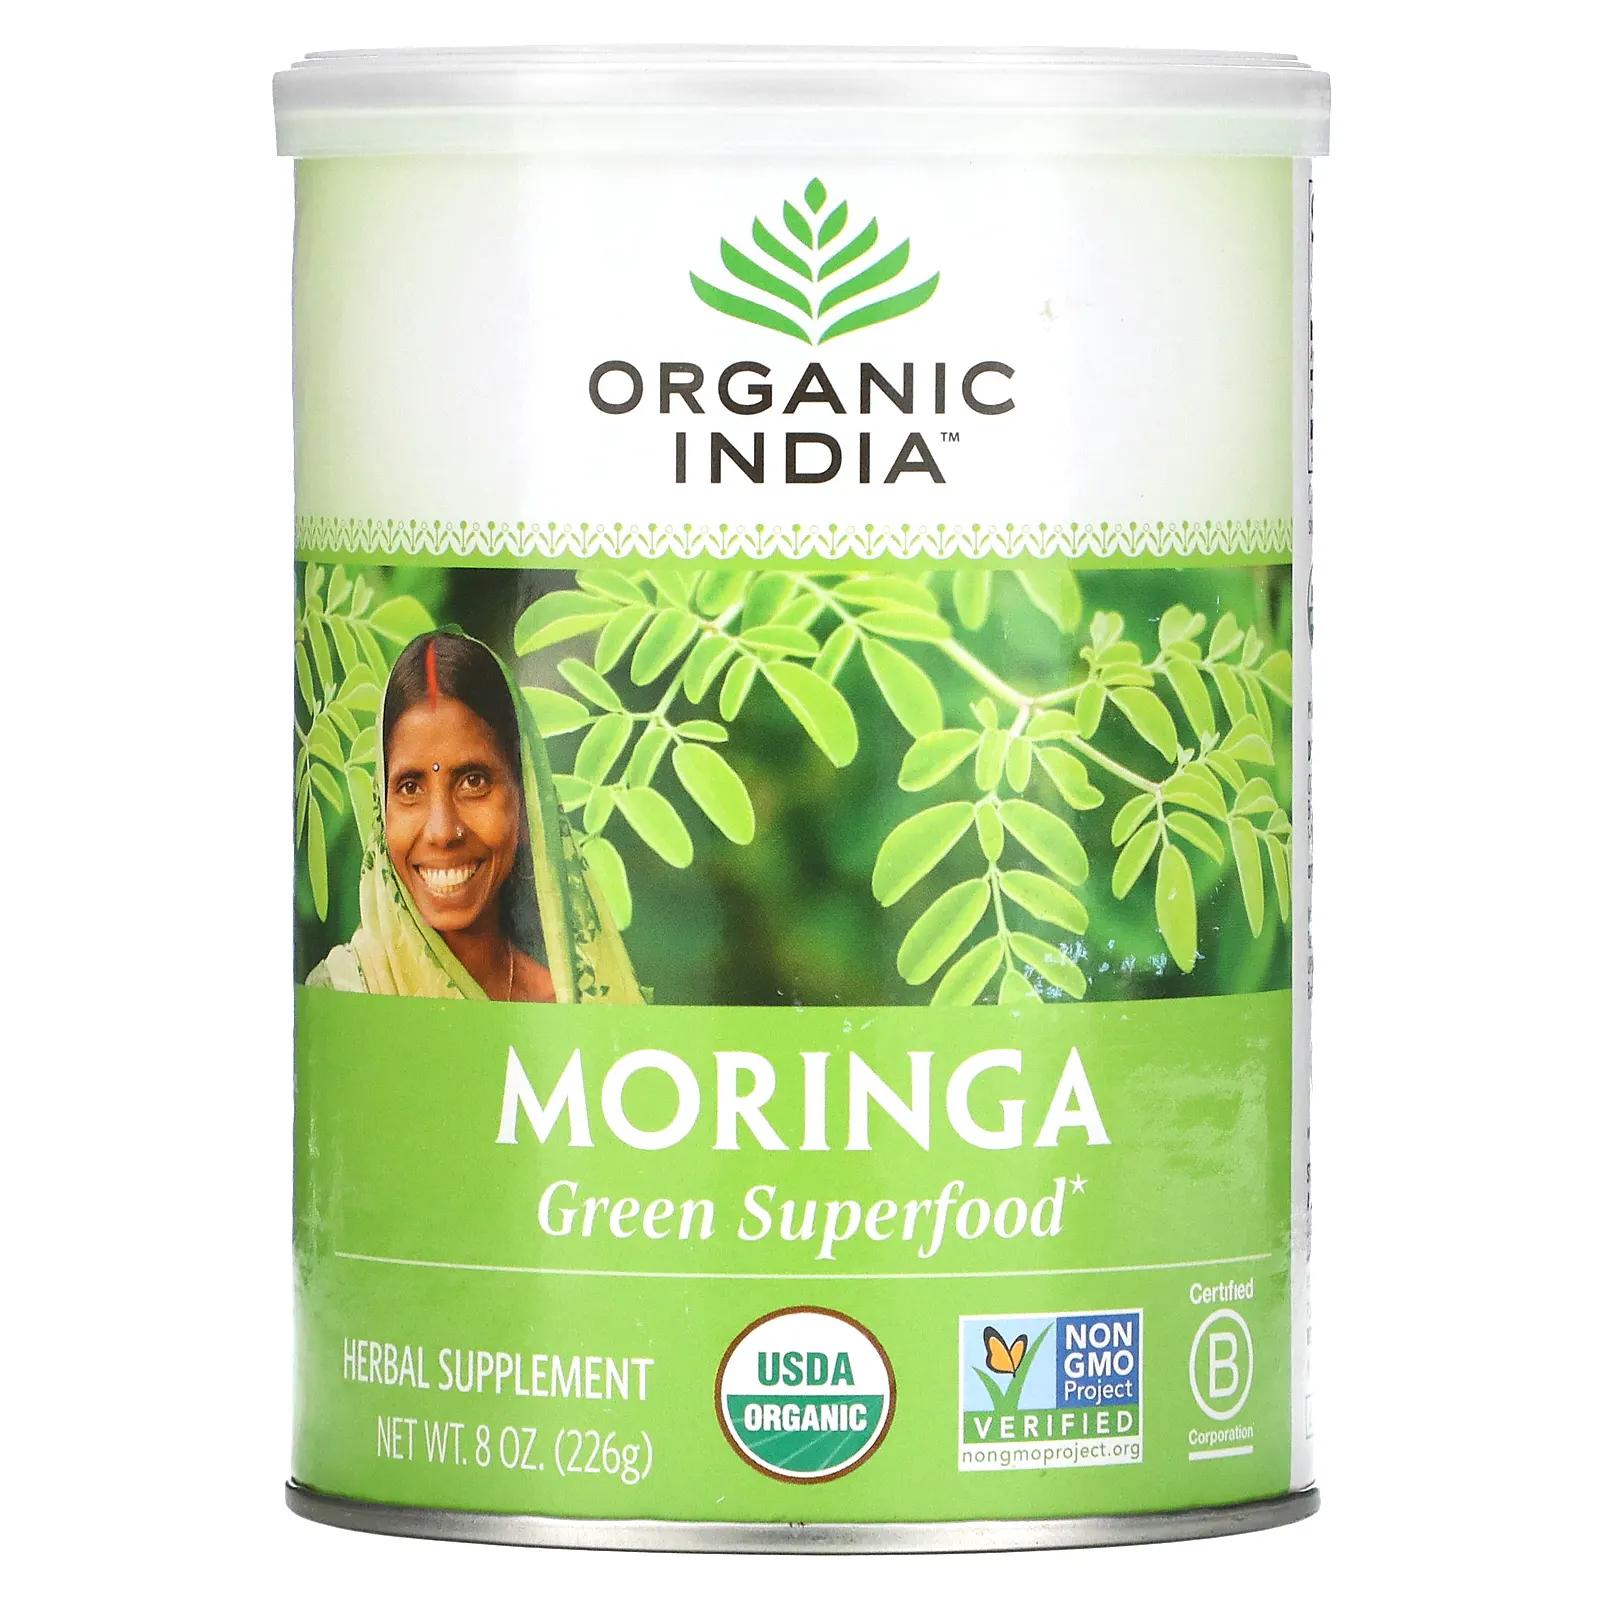 Organic India Порошок листов органической моринги 8 унц. (226 г) knight india darling